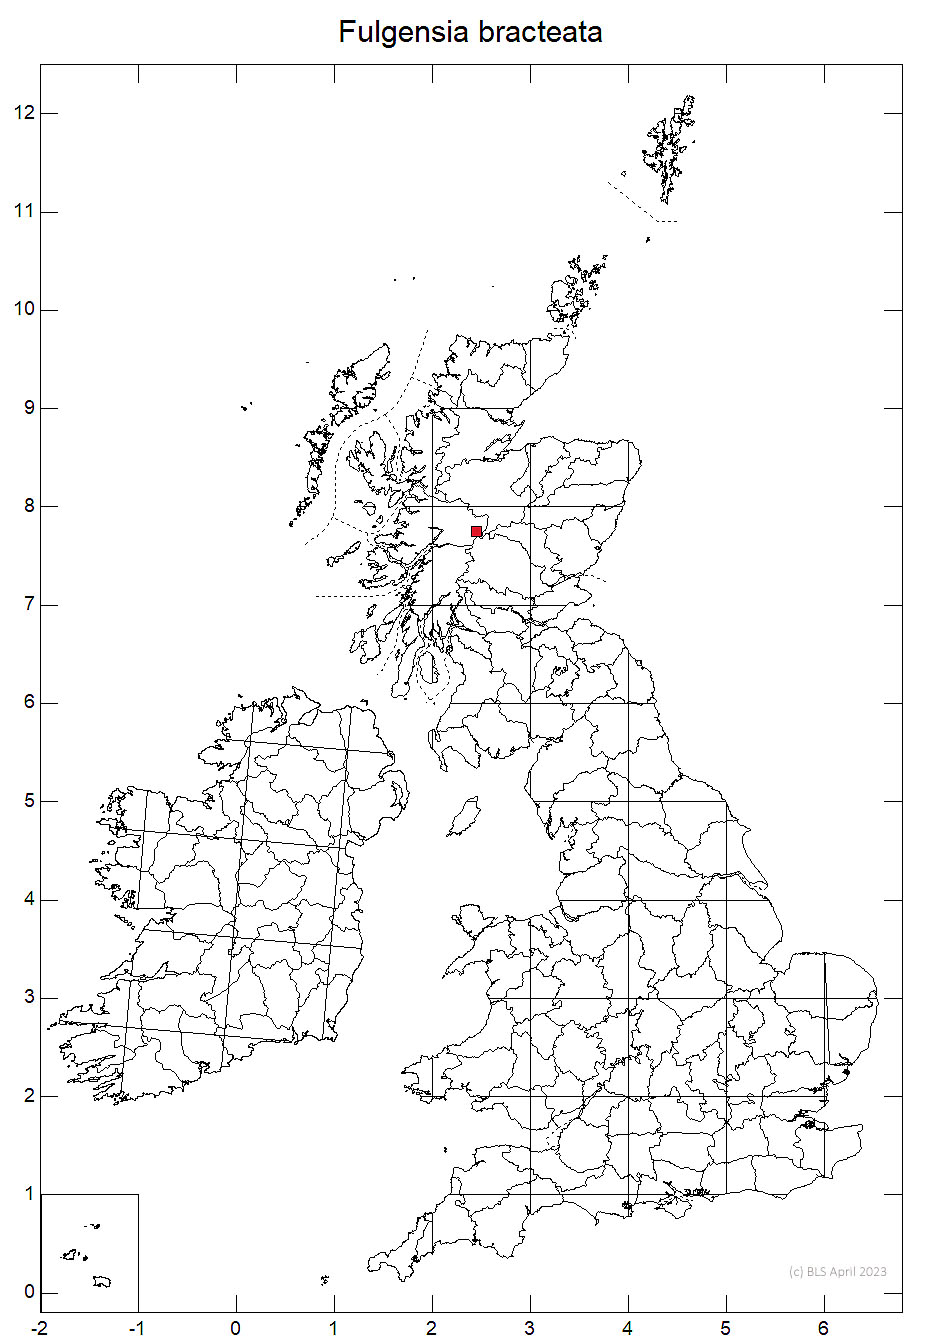 Fulgensia bracteata var. alpina 10km sq distribution map